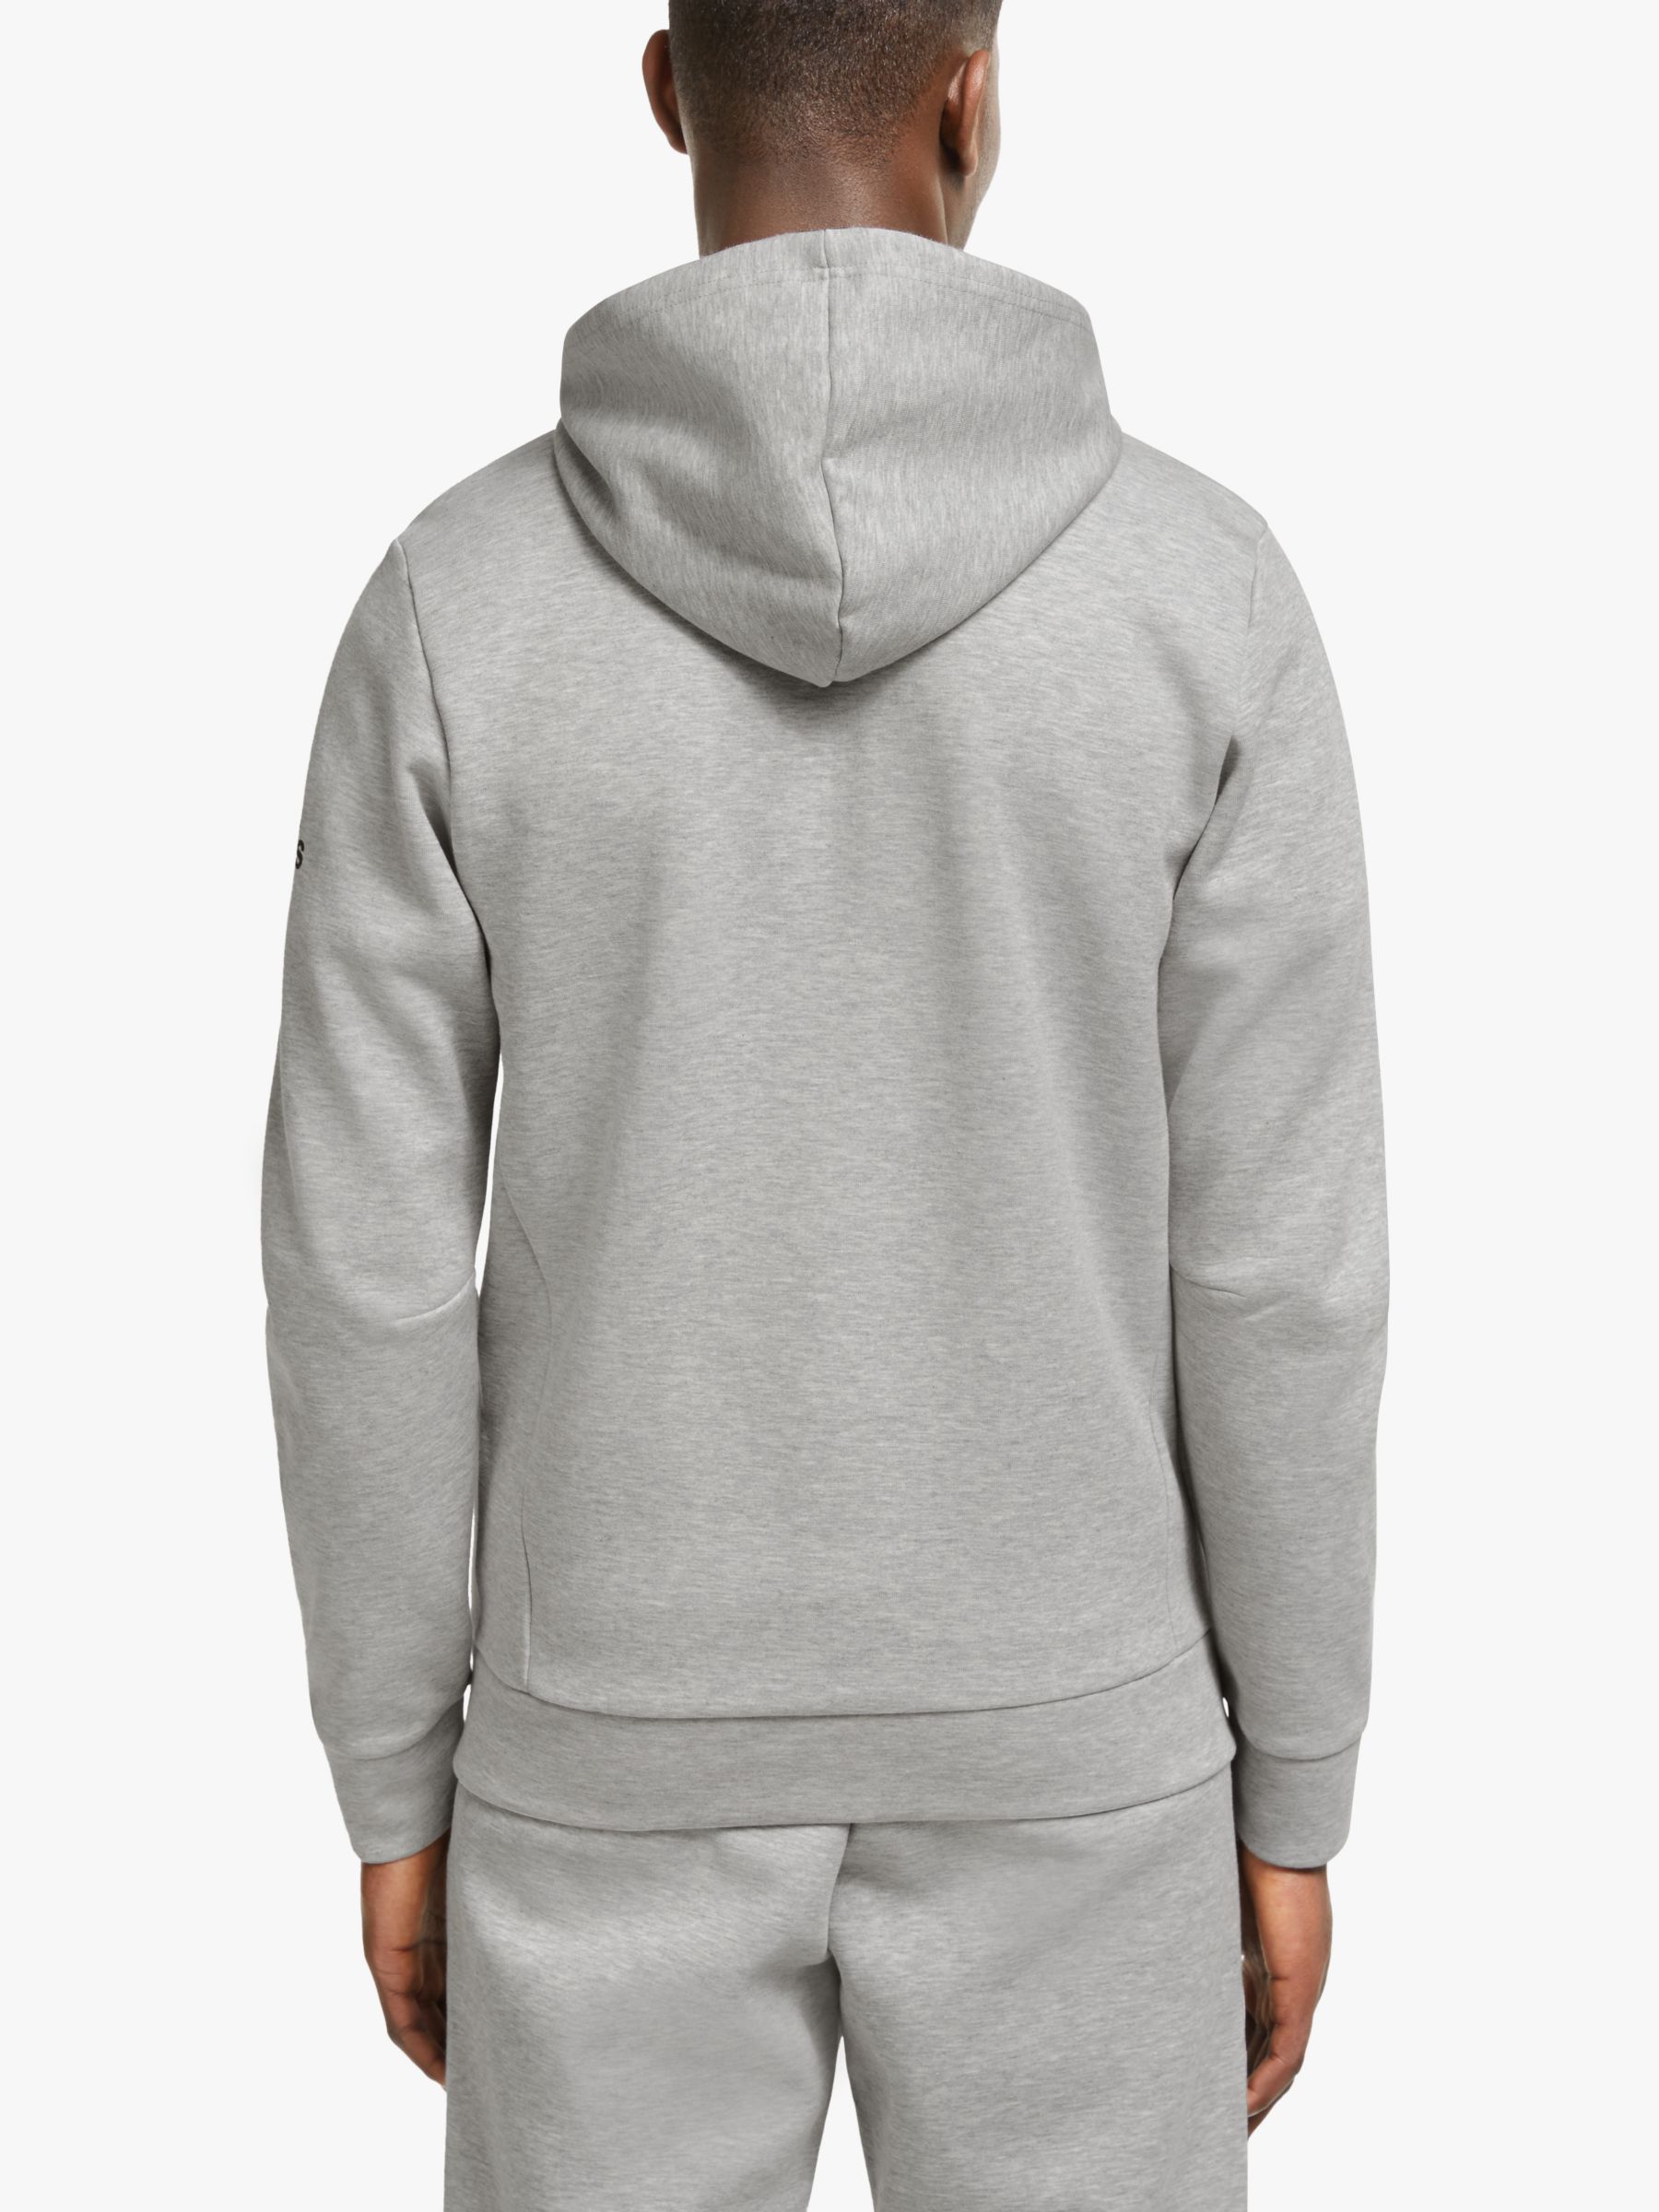 plain adidas hoodie